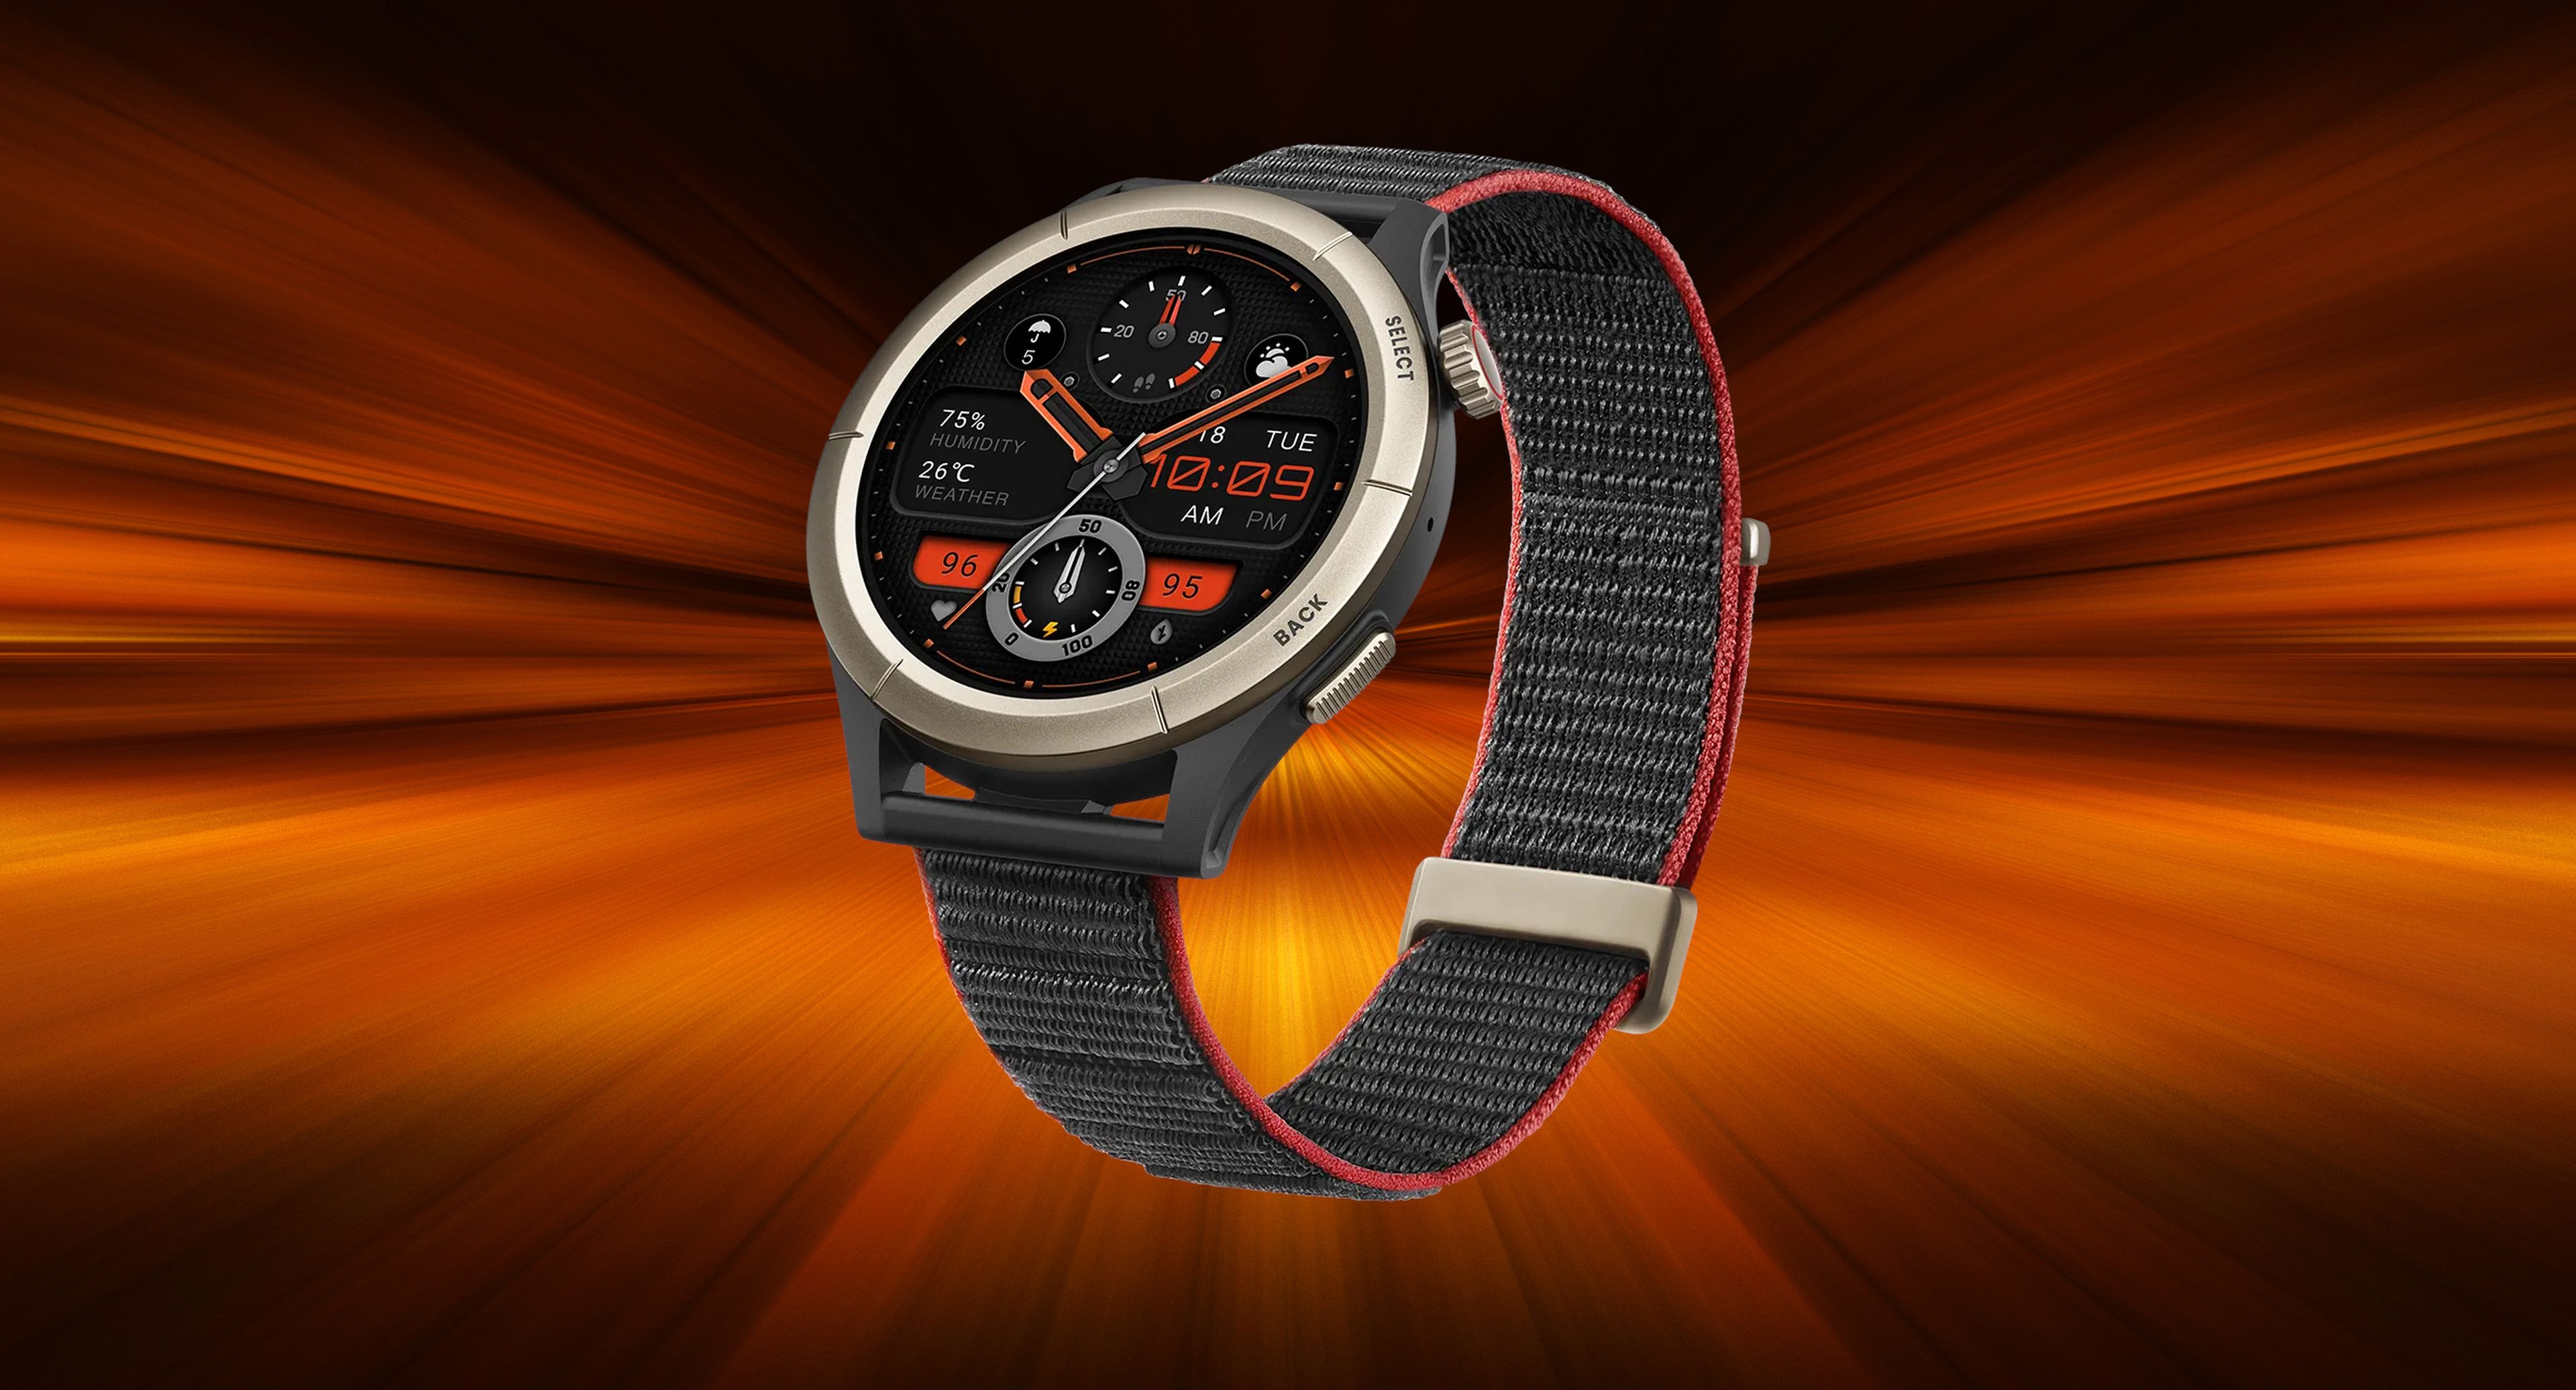 Smartwatch Amazfit Cheetah Pro Reloj Inteligente Color Negro